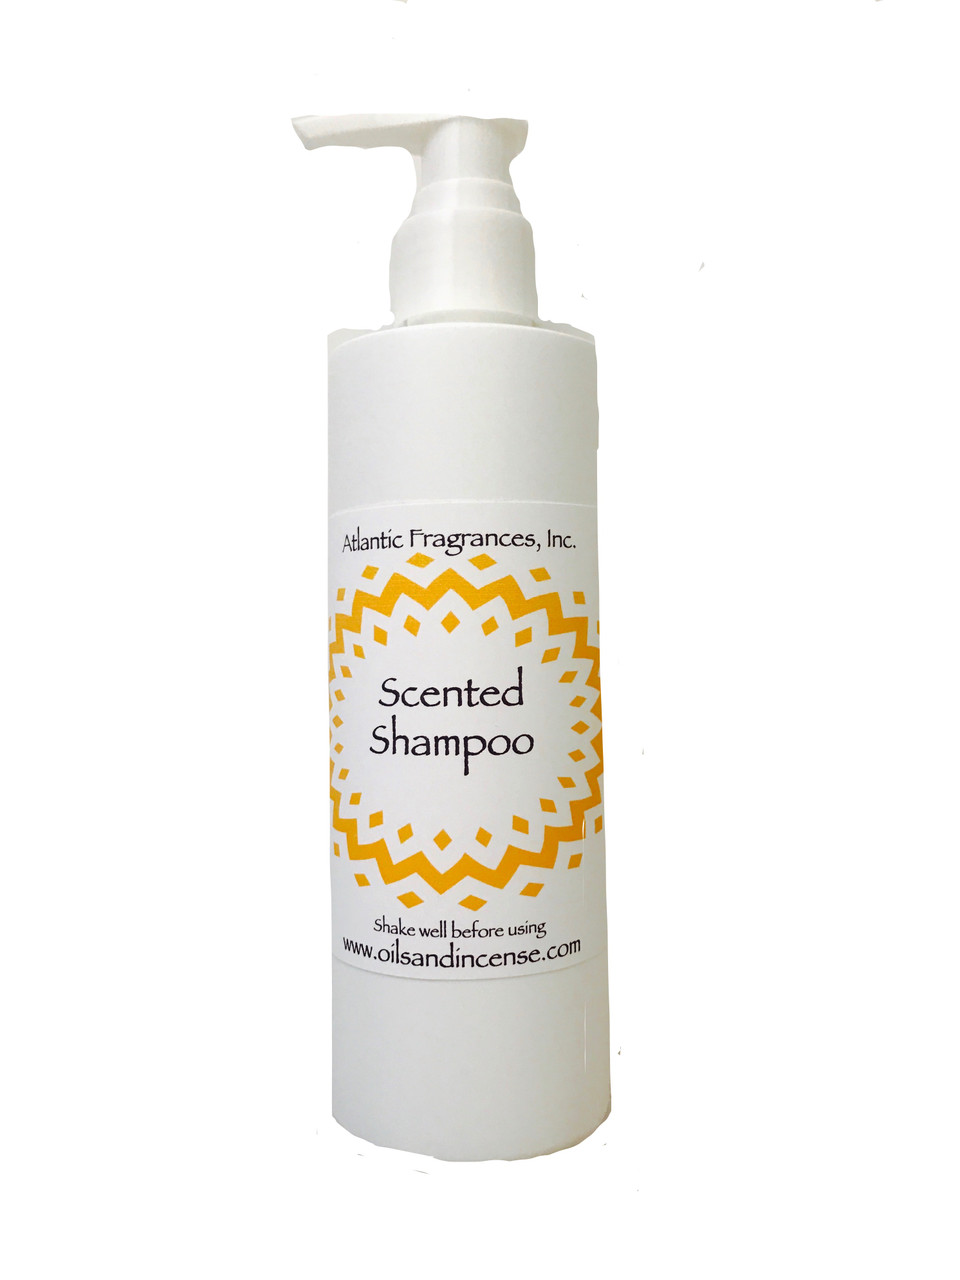 vejviser stemning lave et eksperiment Chanel No. 5 type Shampoo, 8 oz. size - Atlantic Fragrances